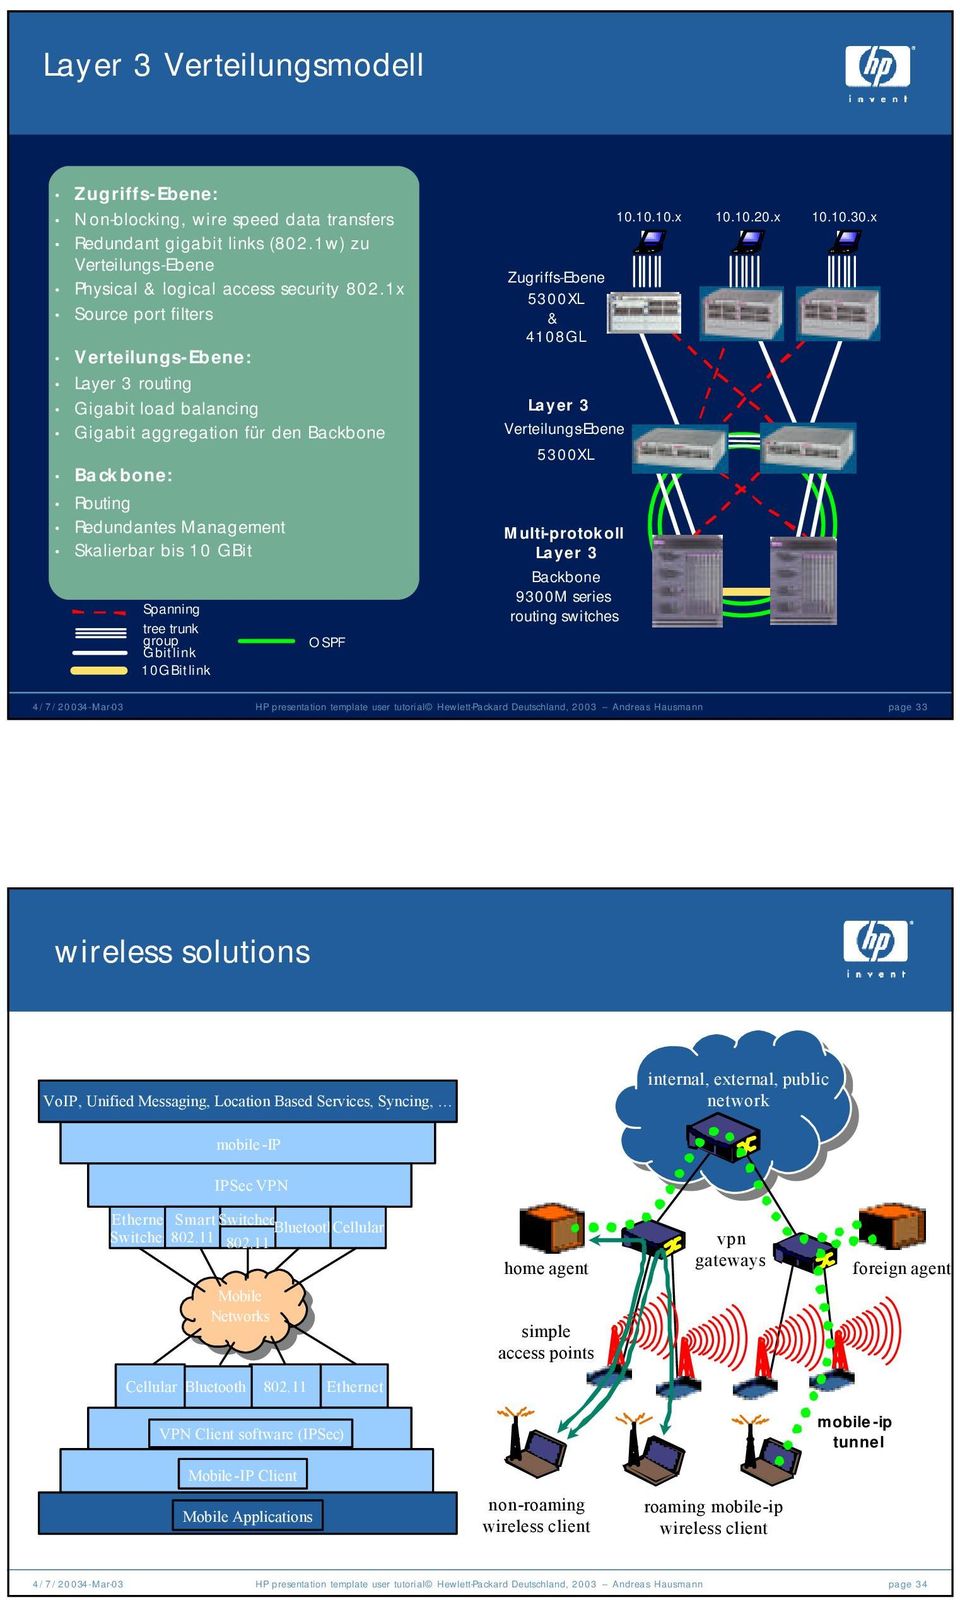 trunk group Gbit link 10GBit link OSPF Zugriffs-Ebene 5300